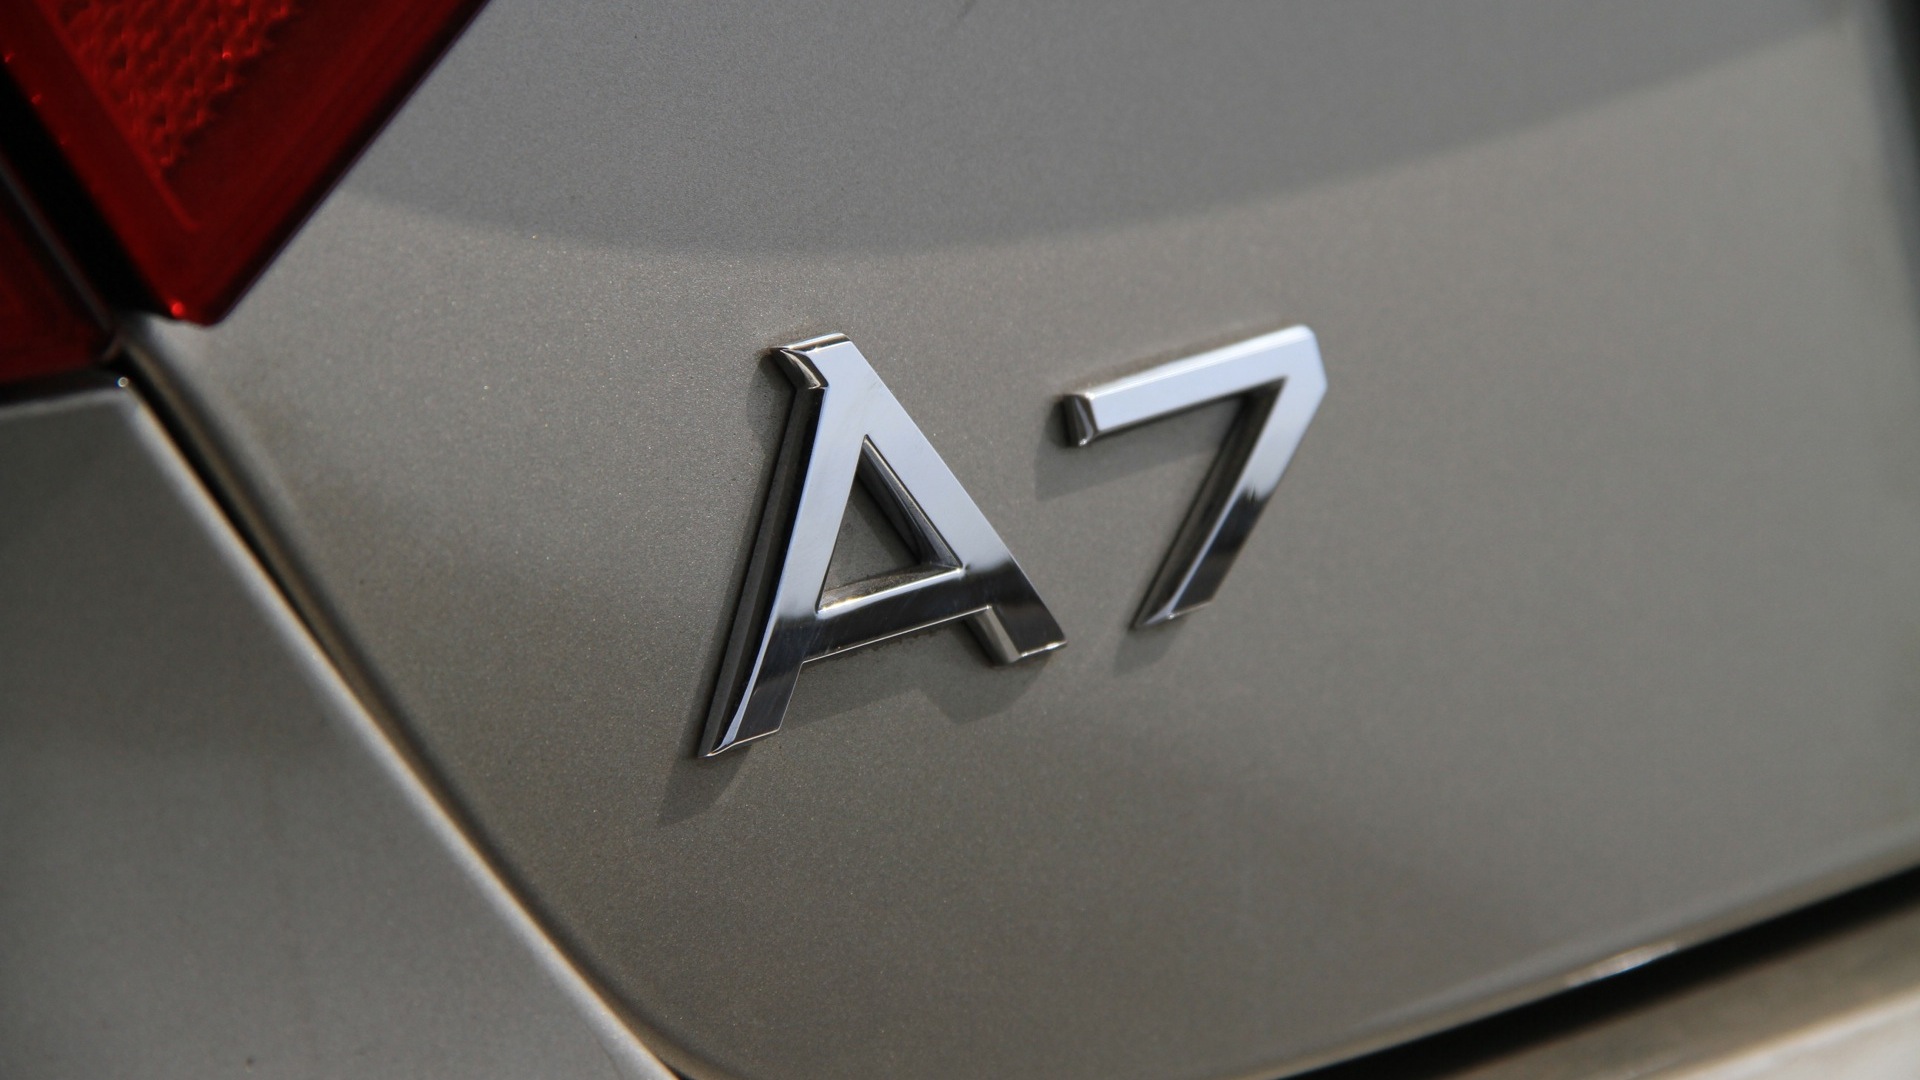 Audi-A7-Sportback-2012-3-0-TDI-Quattro-Exterior